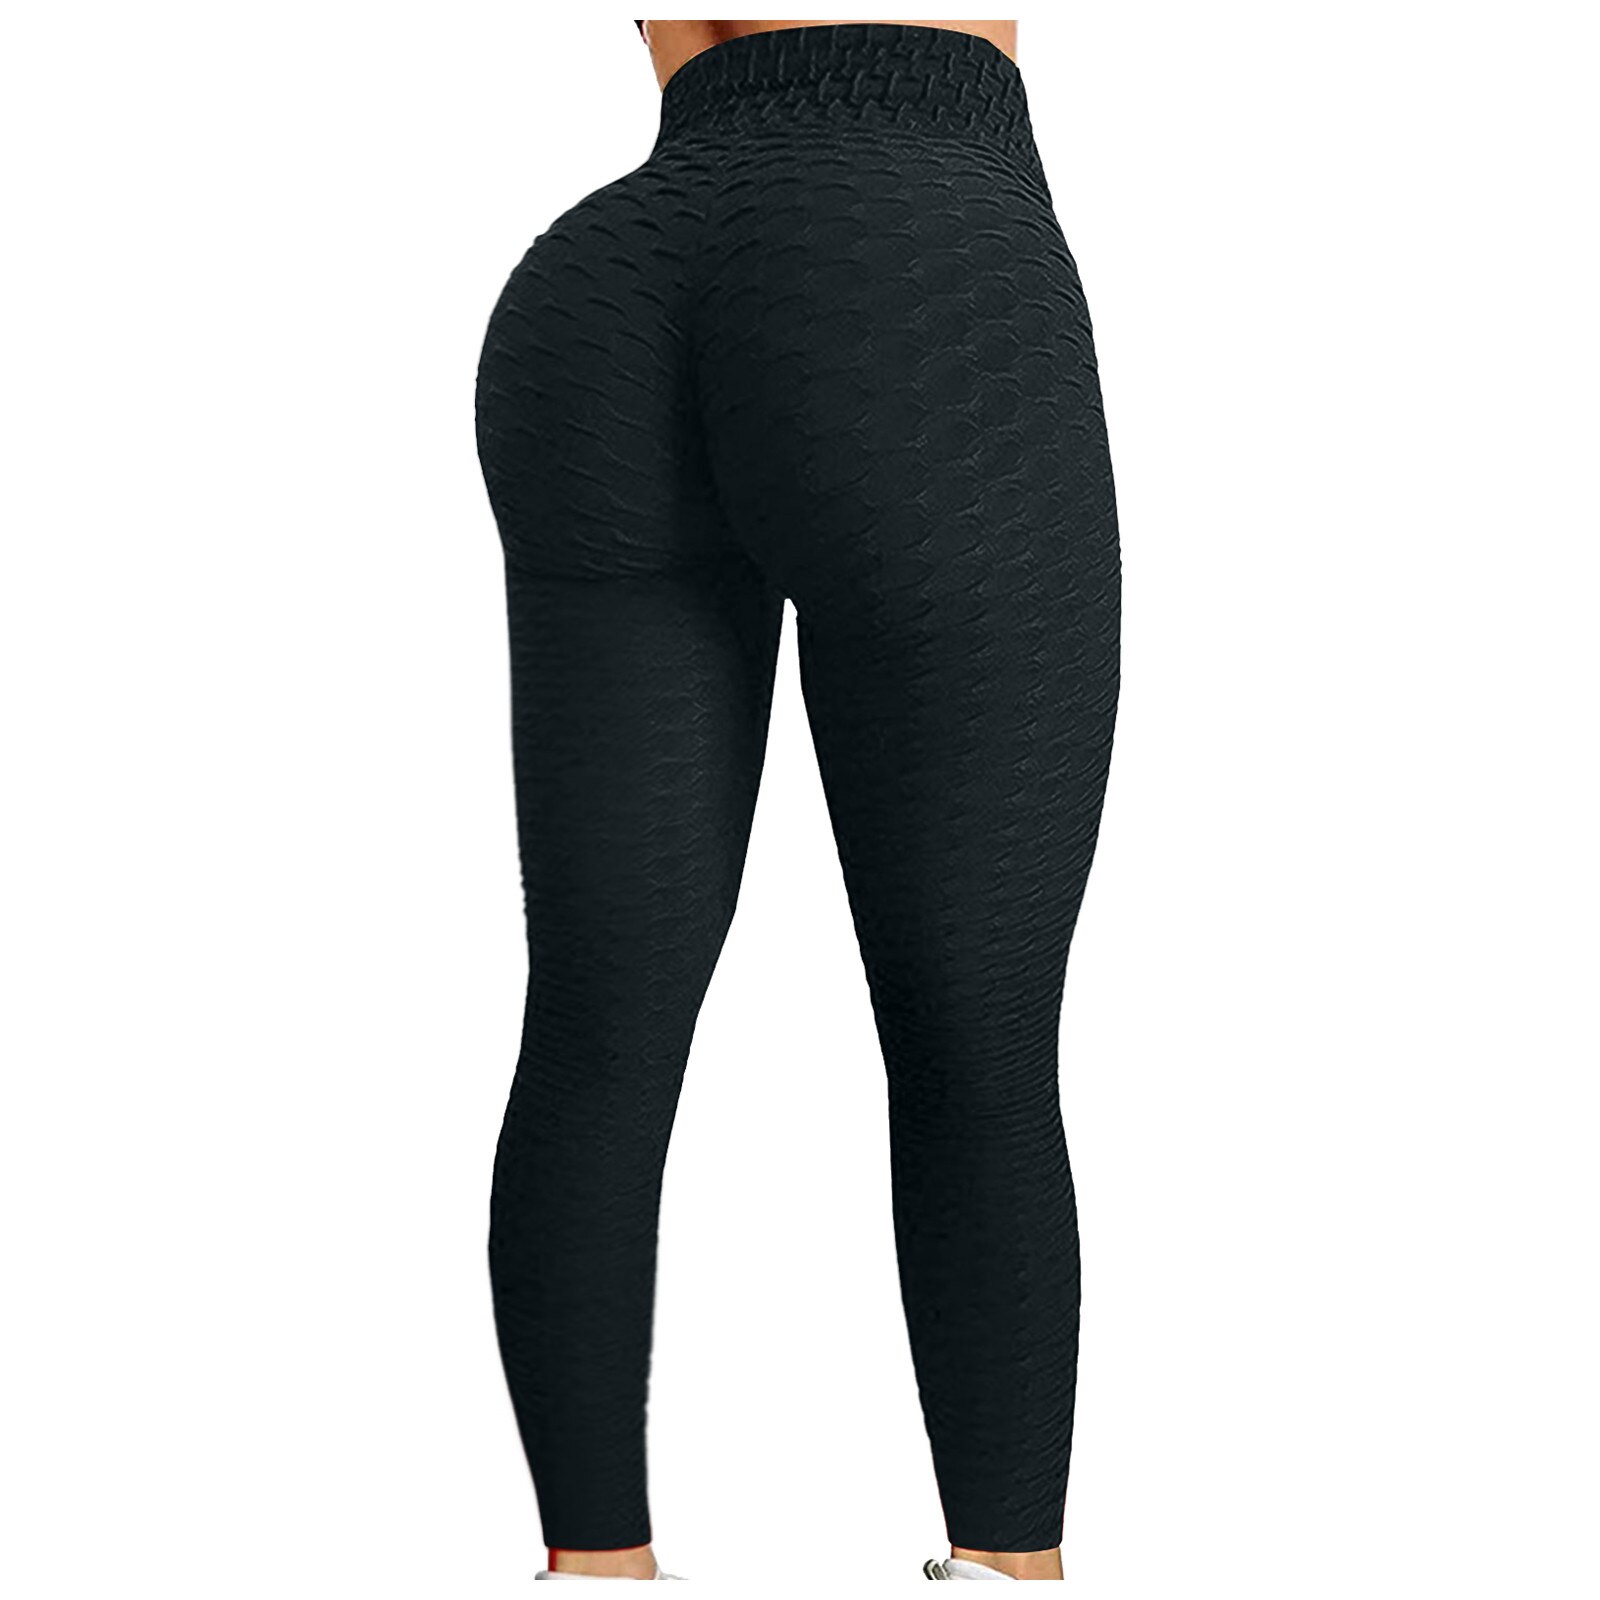 Yoga Pants Fitness Sports Leggings Jacquard gym pantalones Female Running Trousers High Waist Tight leggings women